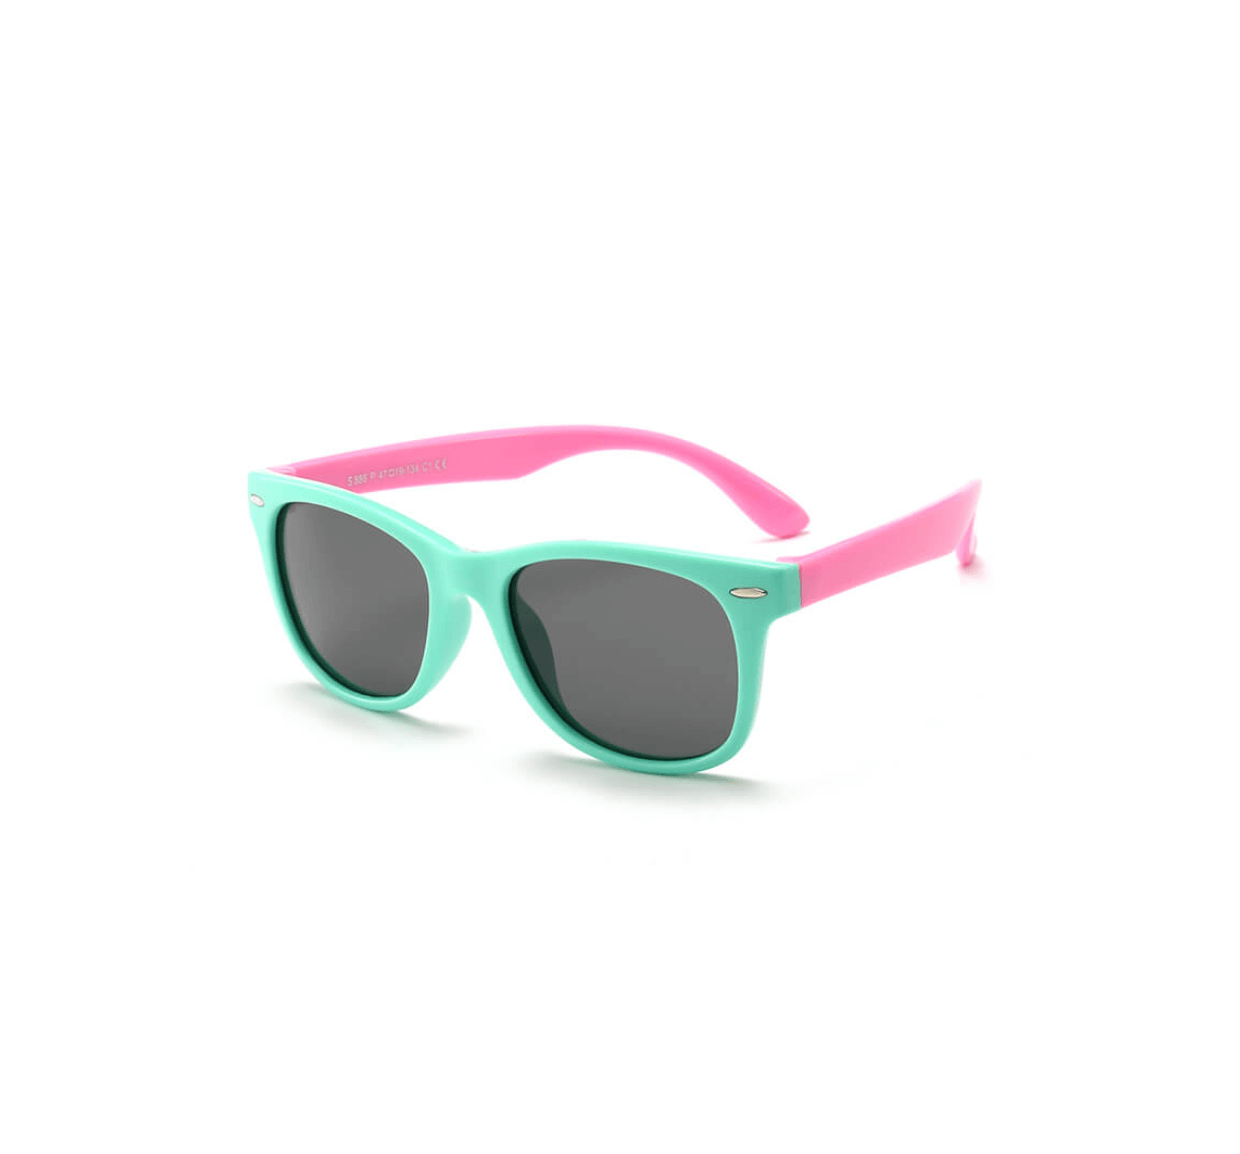  polarized wholesale sunglasses, green childrens sunglasses, wholesale polarised sunglasses, bulk polarized sunglasses, Sunglasses Manufacturer in China